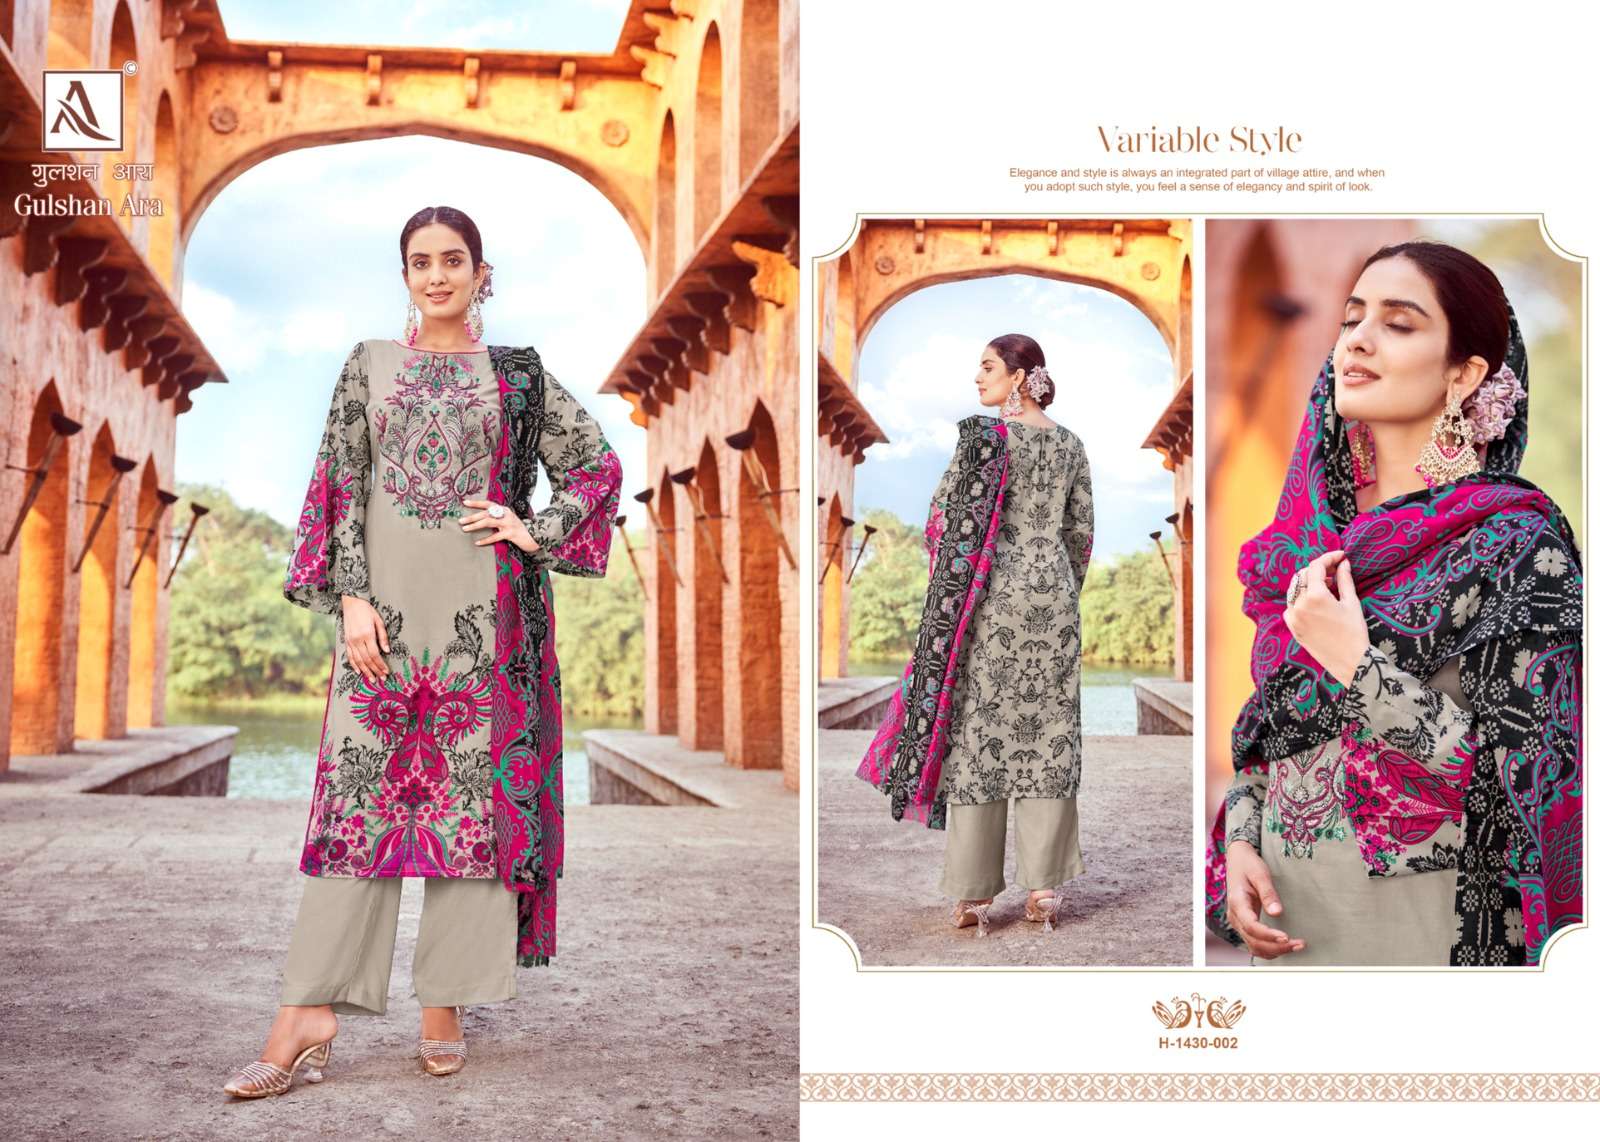 alok suit gulshan ara cambric new and modern look salwar suit catalog